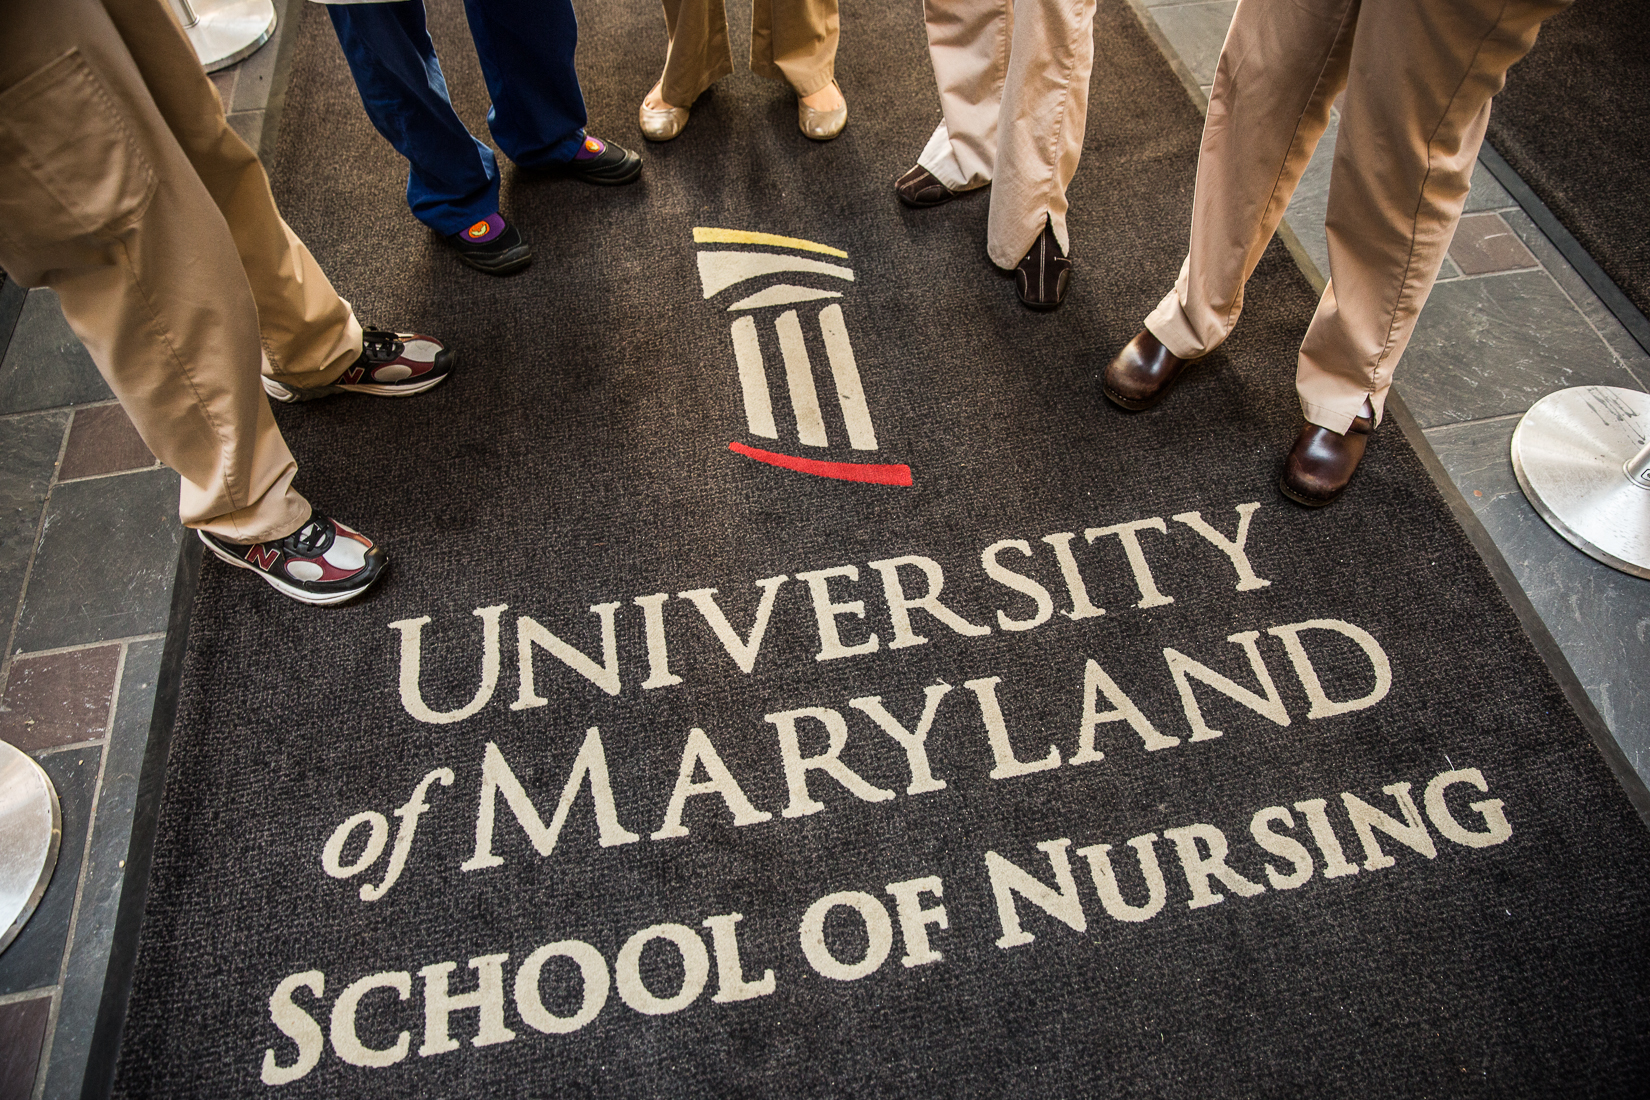 Orientation | University of Maryland School of Nursing